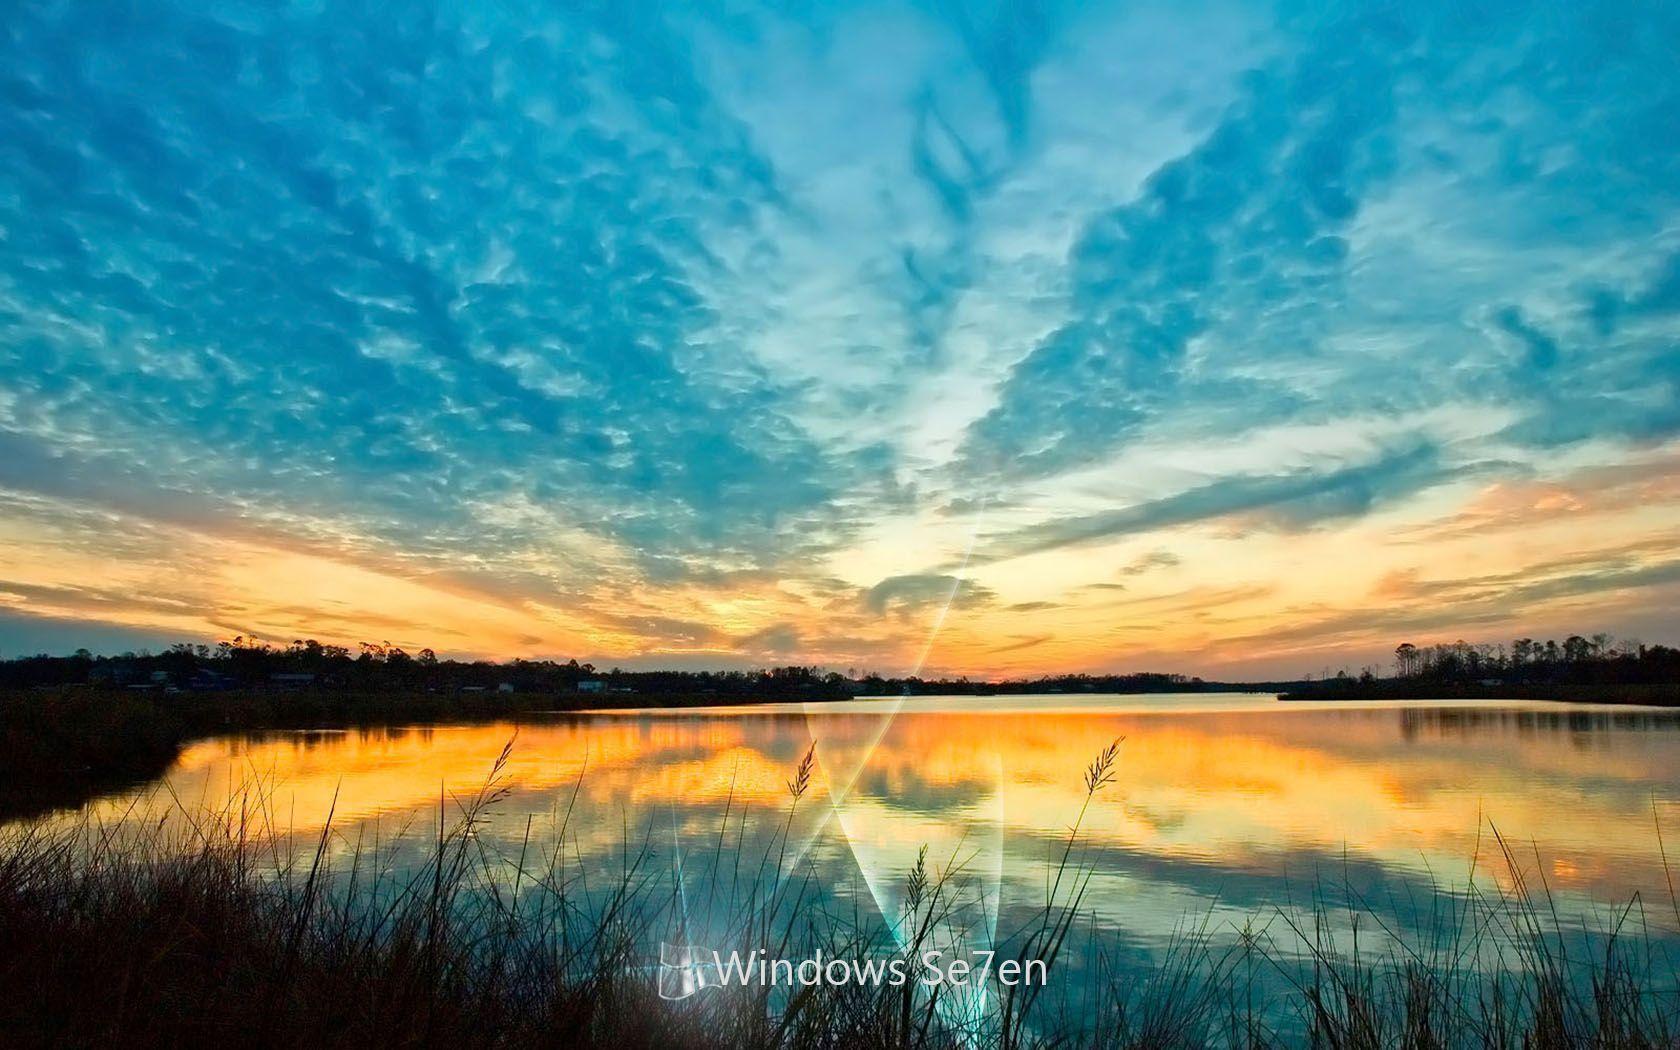 Windows 7 Wallpaper. Sizzled Core, Internet Media